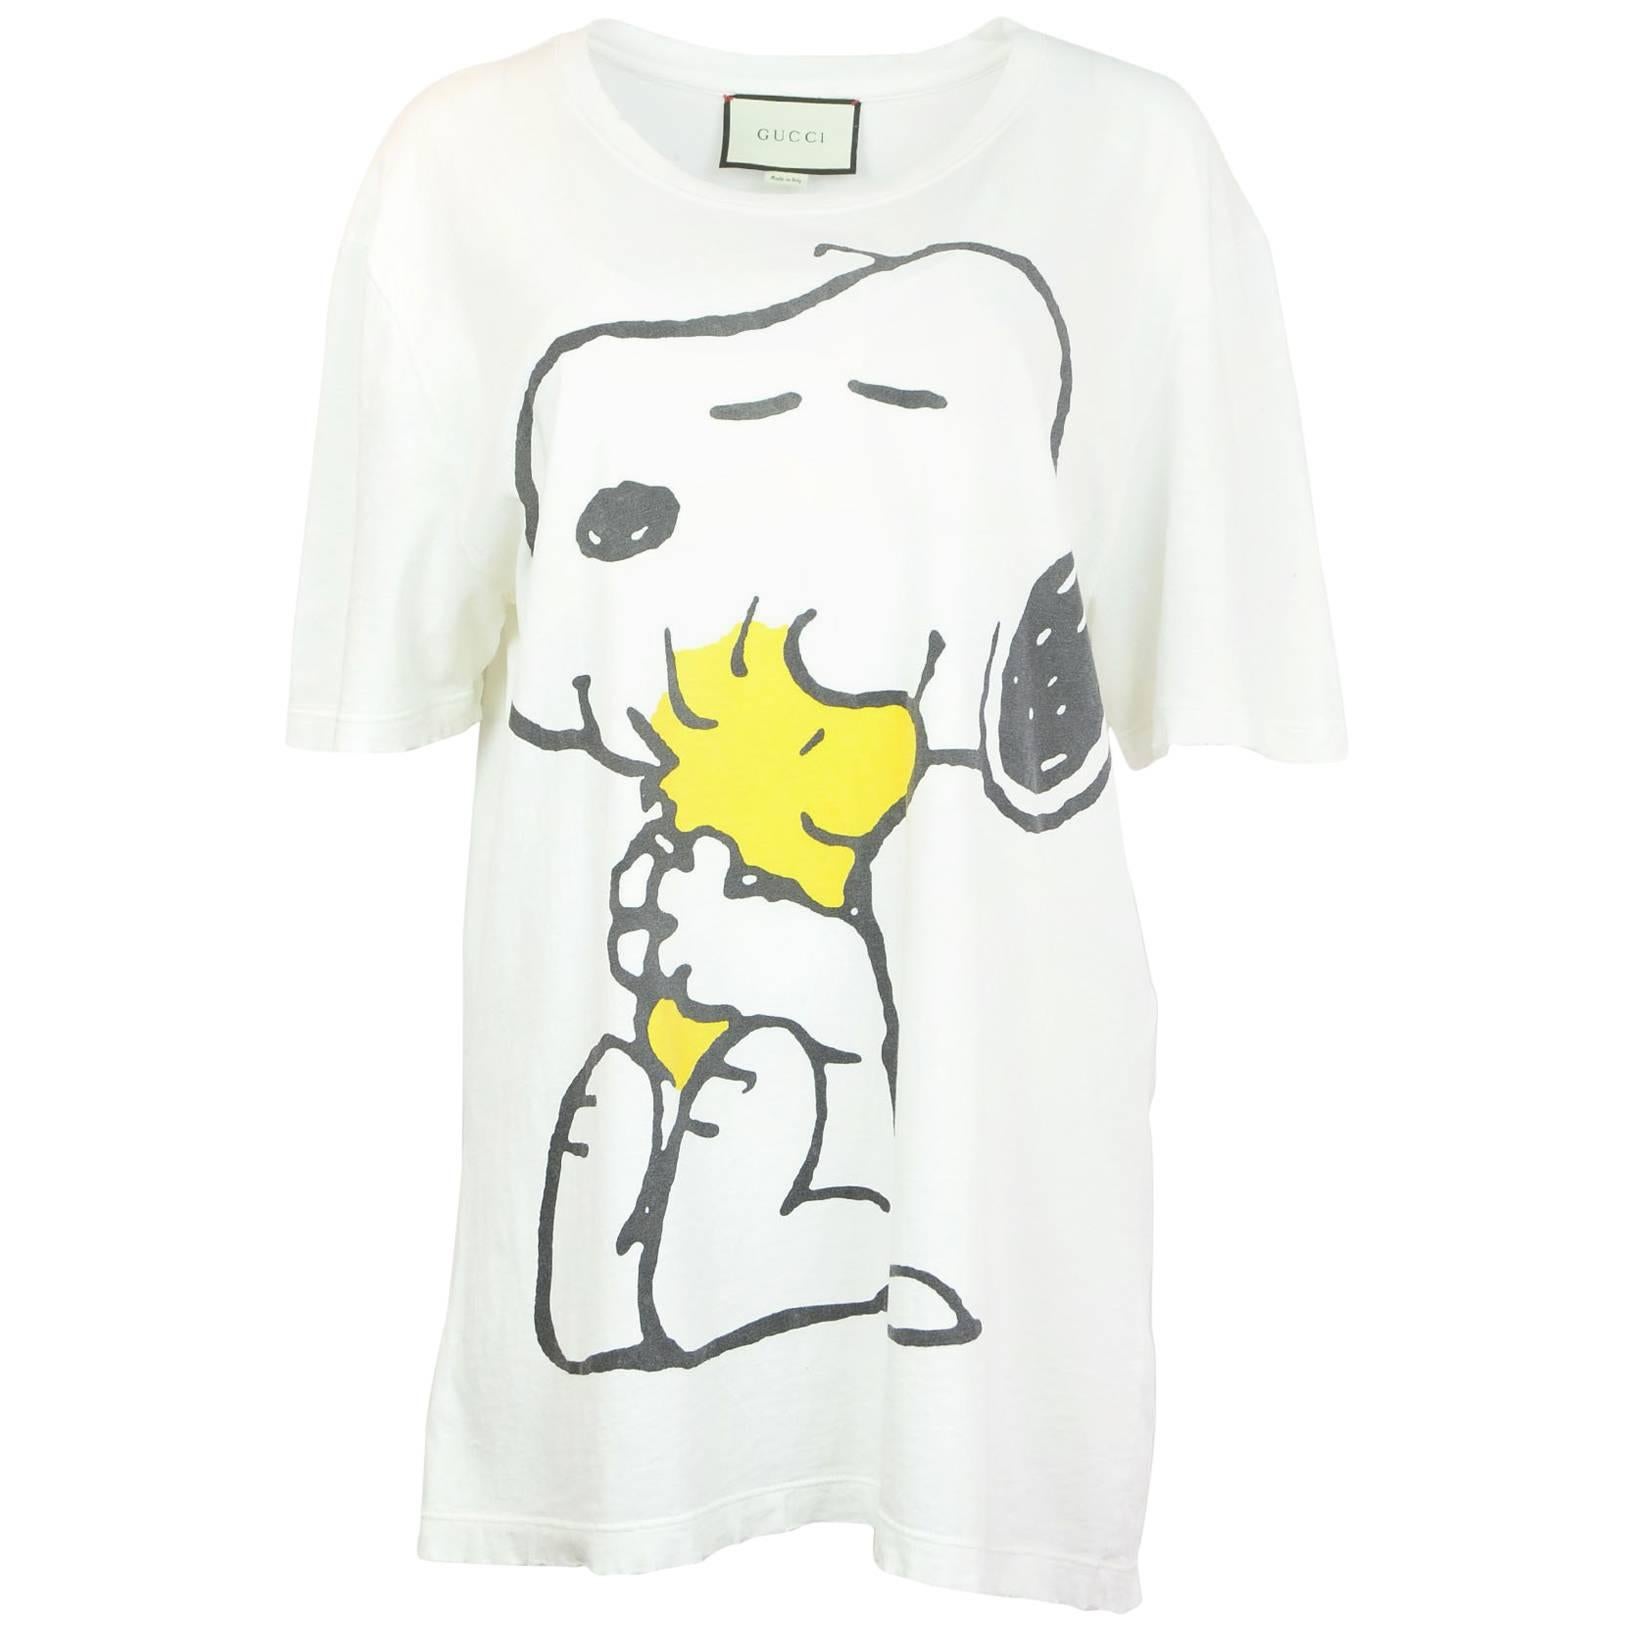 Gucci Men's '16 Snoopy & Woodstock Distressed T-Shirt Sz XL